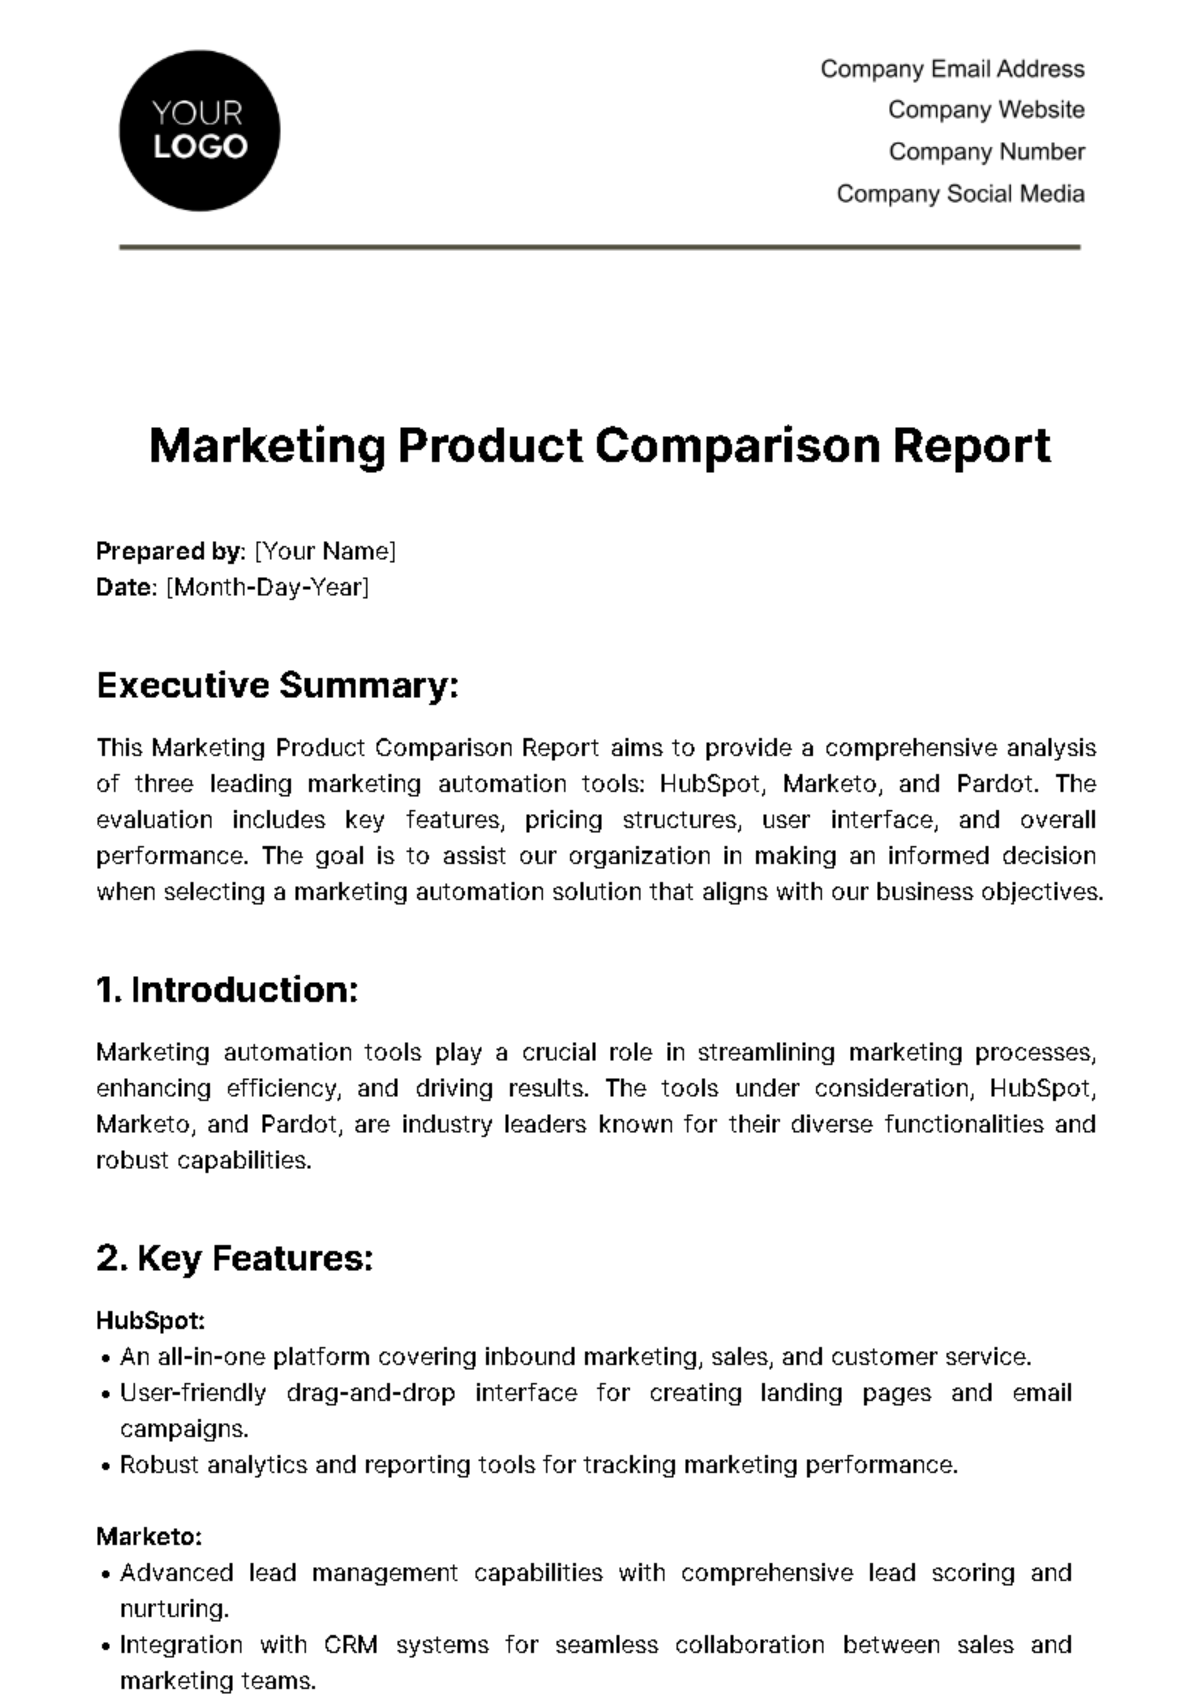 Marketing Product Comparison Report Template